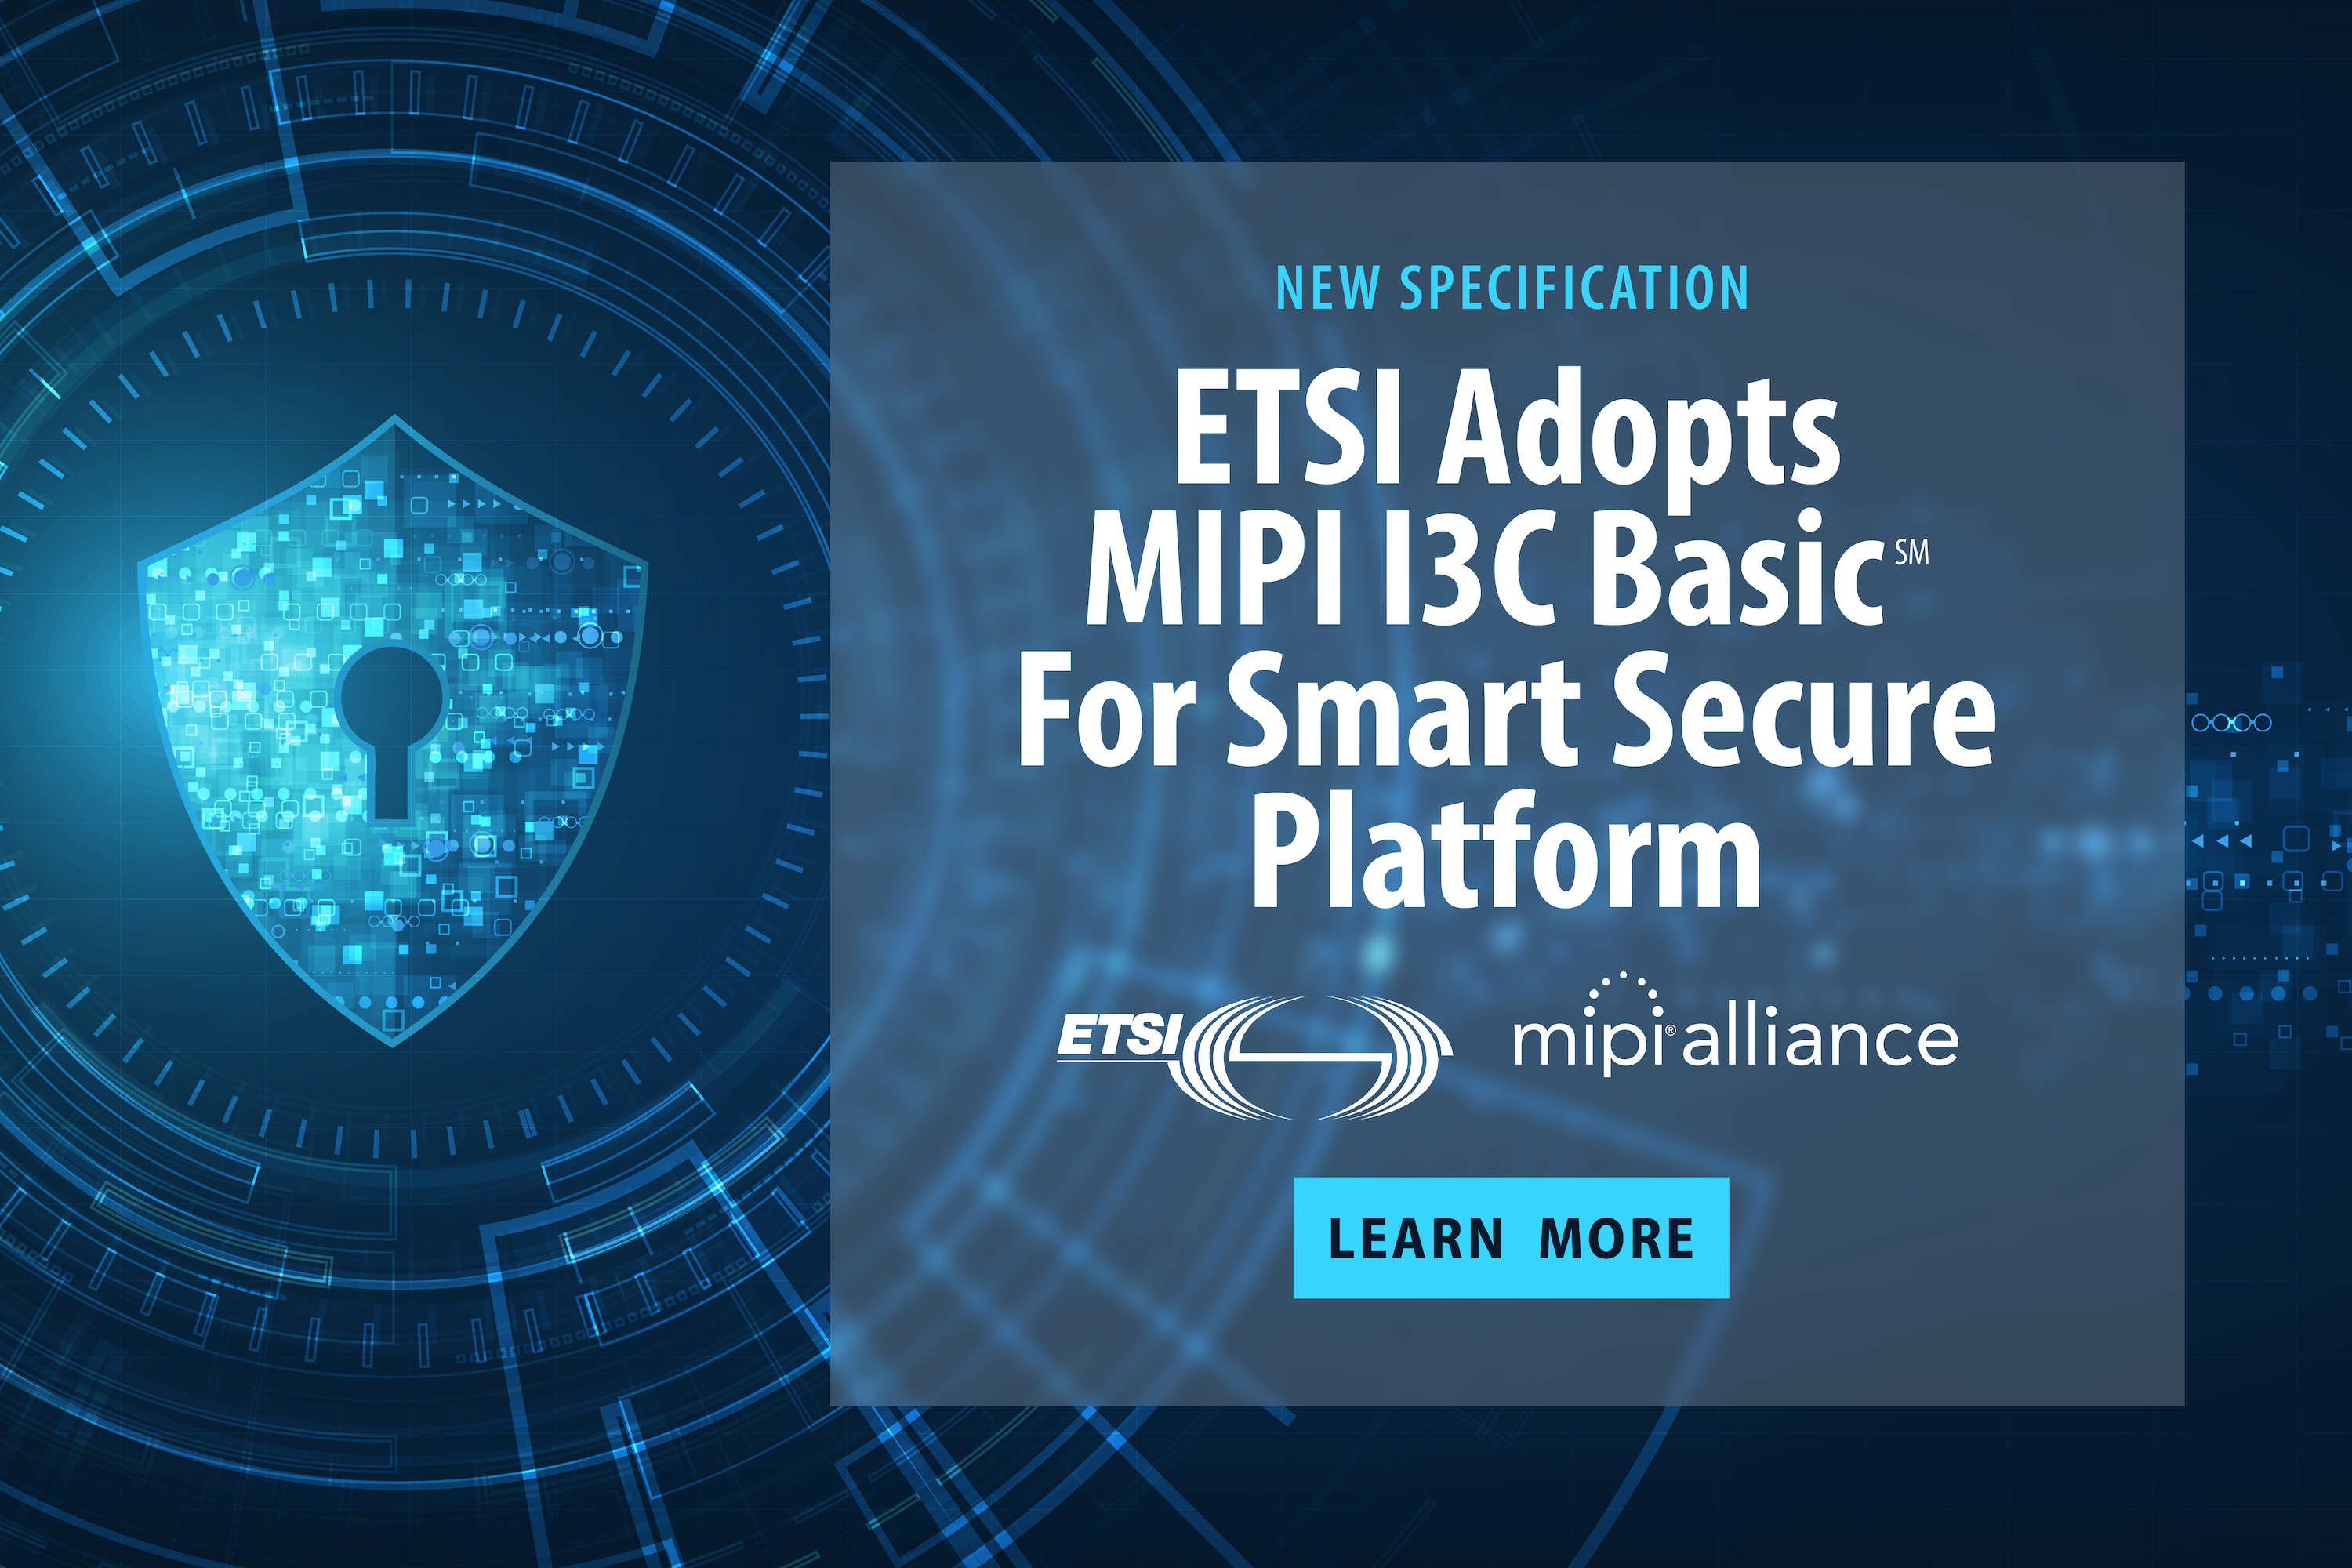 ETSI Adopts MIPI I3C Basic in SSP